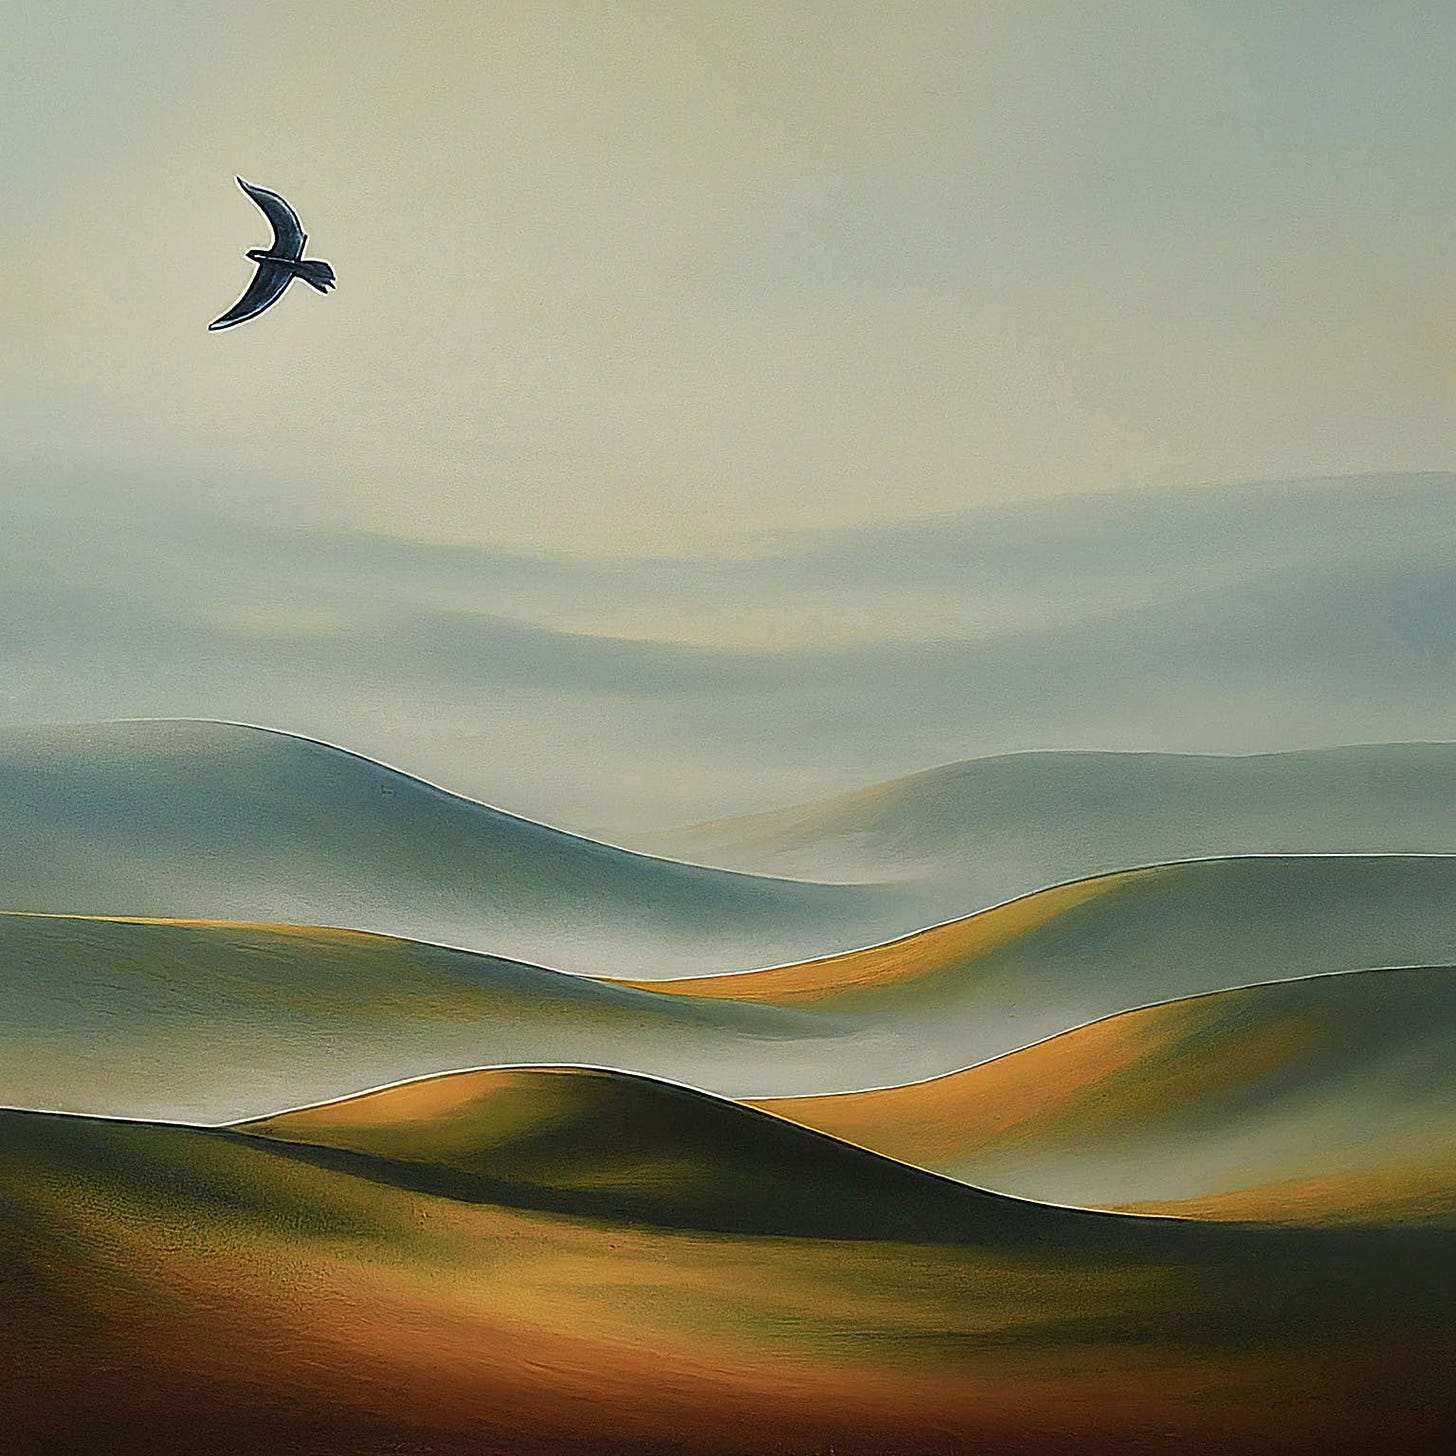 Sand dunes with a bird flying overhead